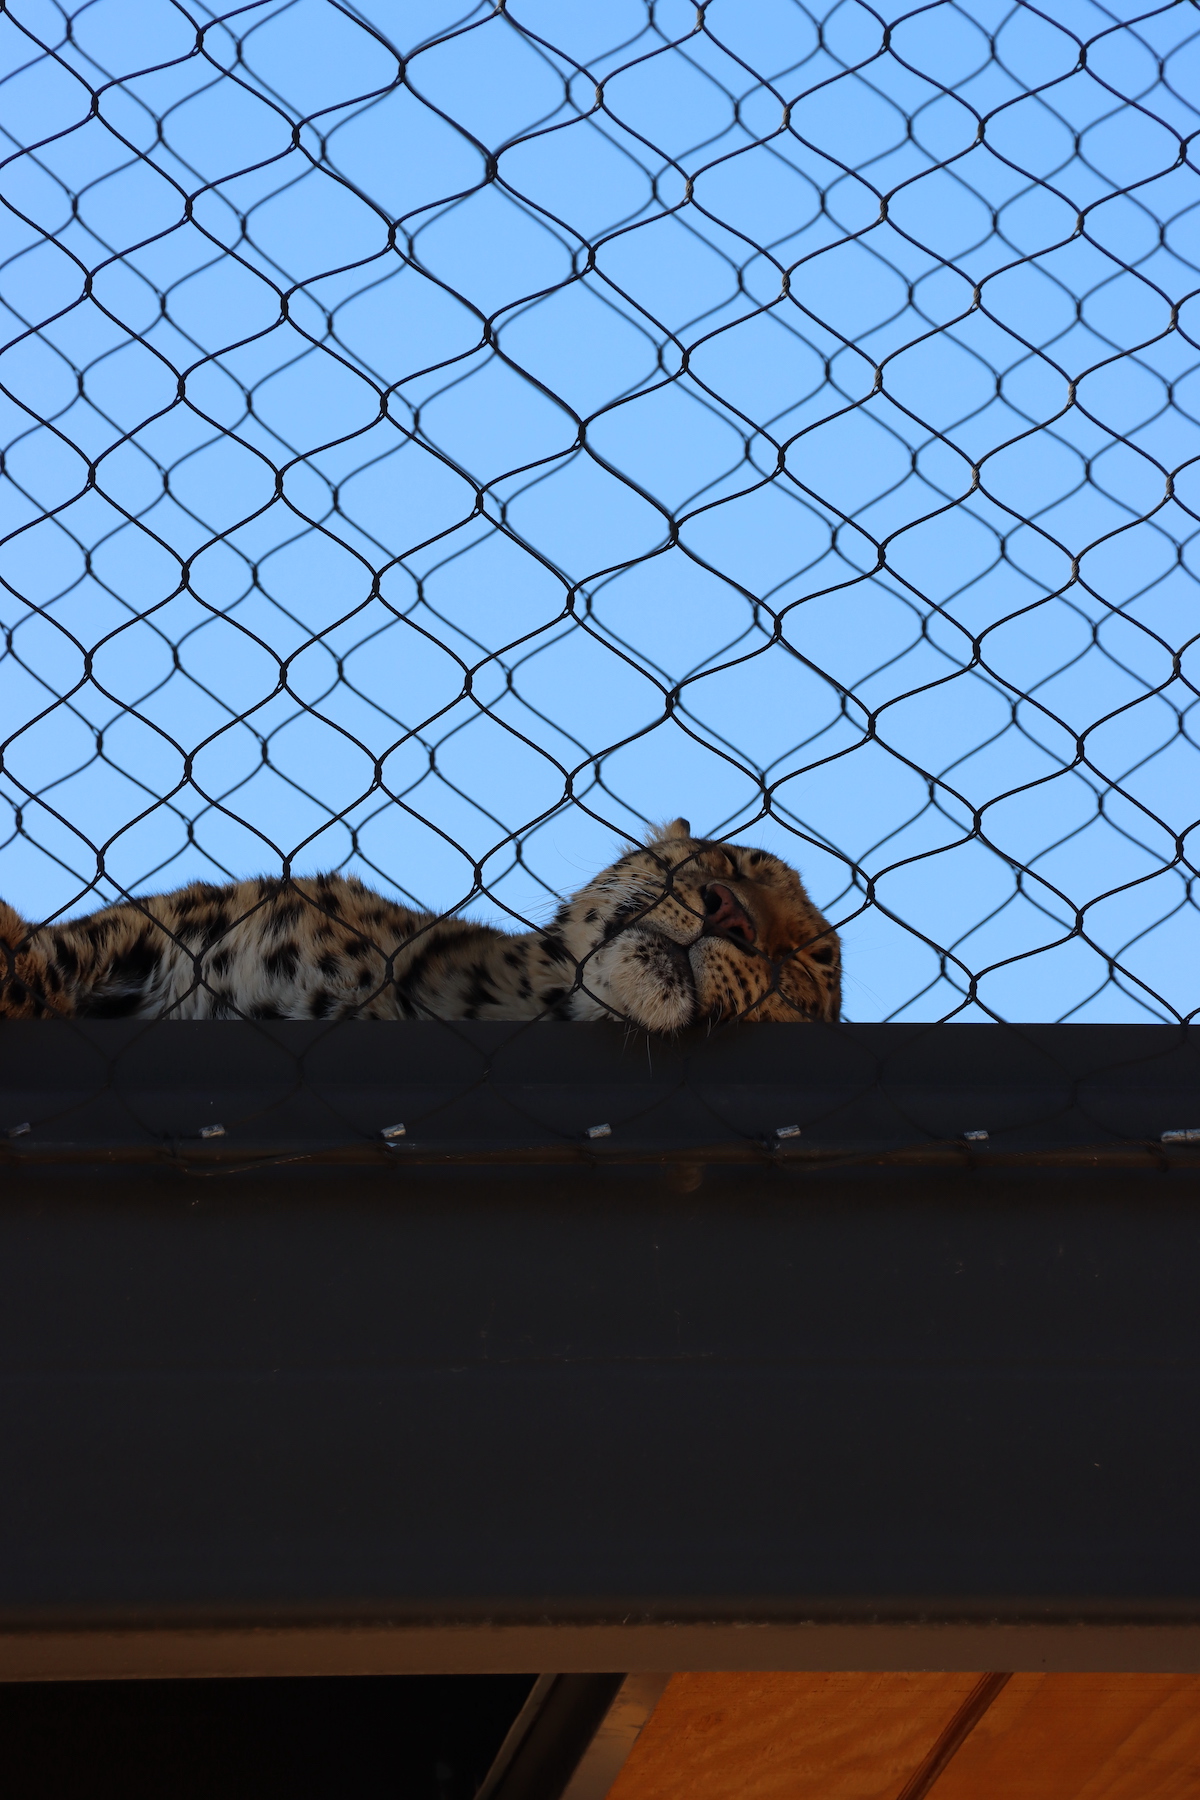 Sleeping leopard at the Sedgwick County Zoo in Wichita, Kansas